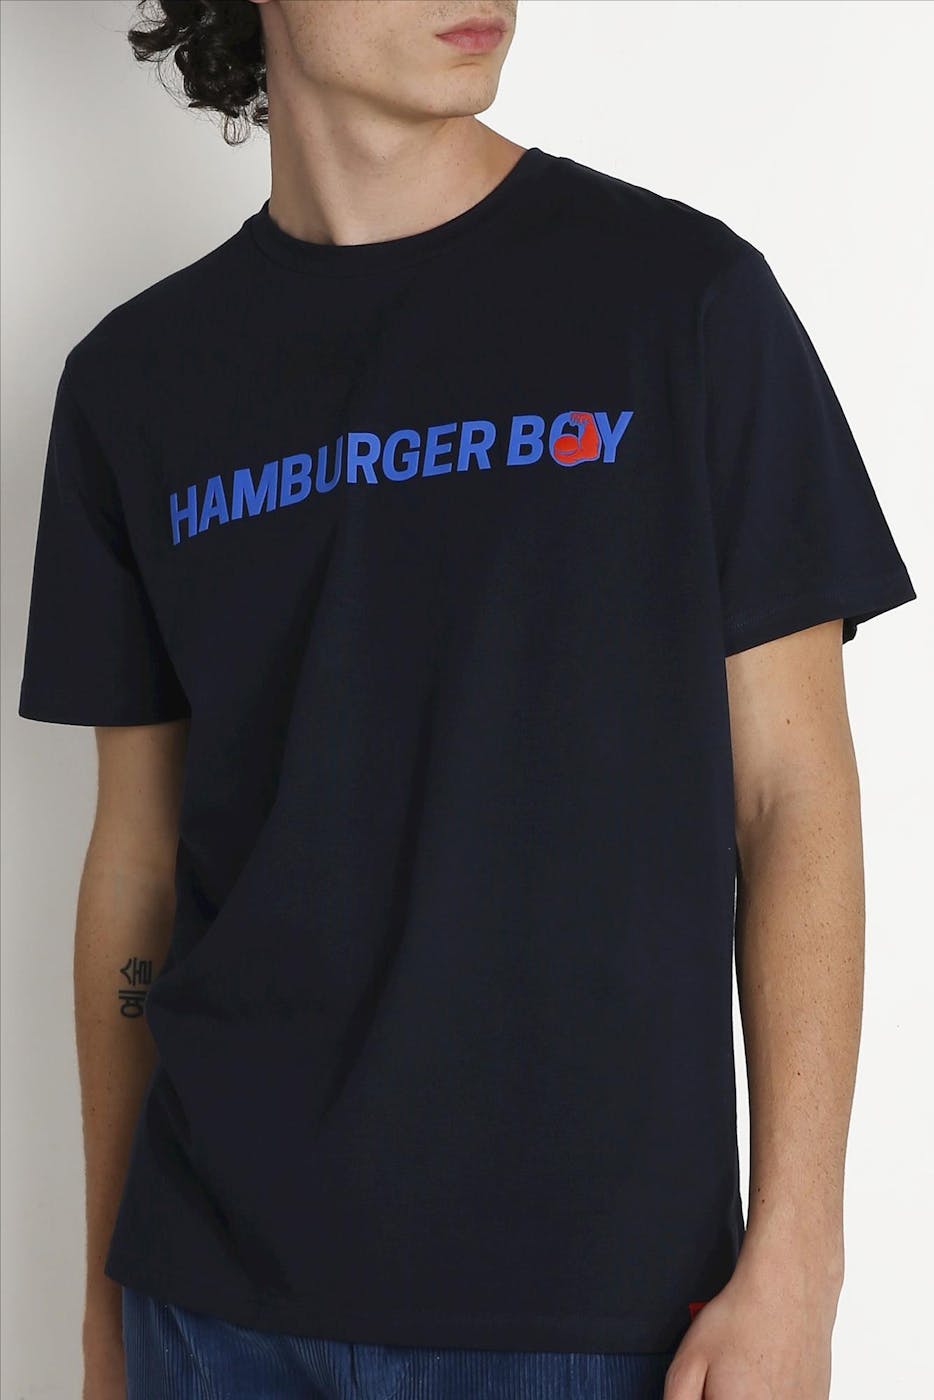 Antwrp - Donkerblauwe Hamburger Boy T-shirt